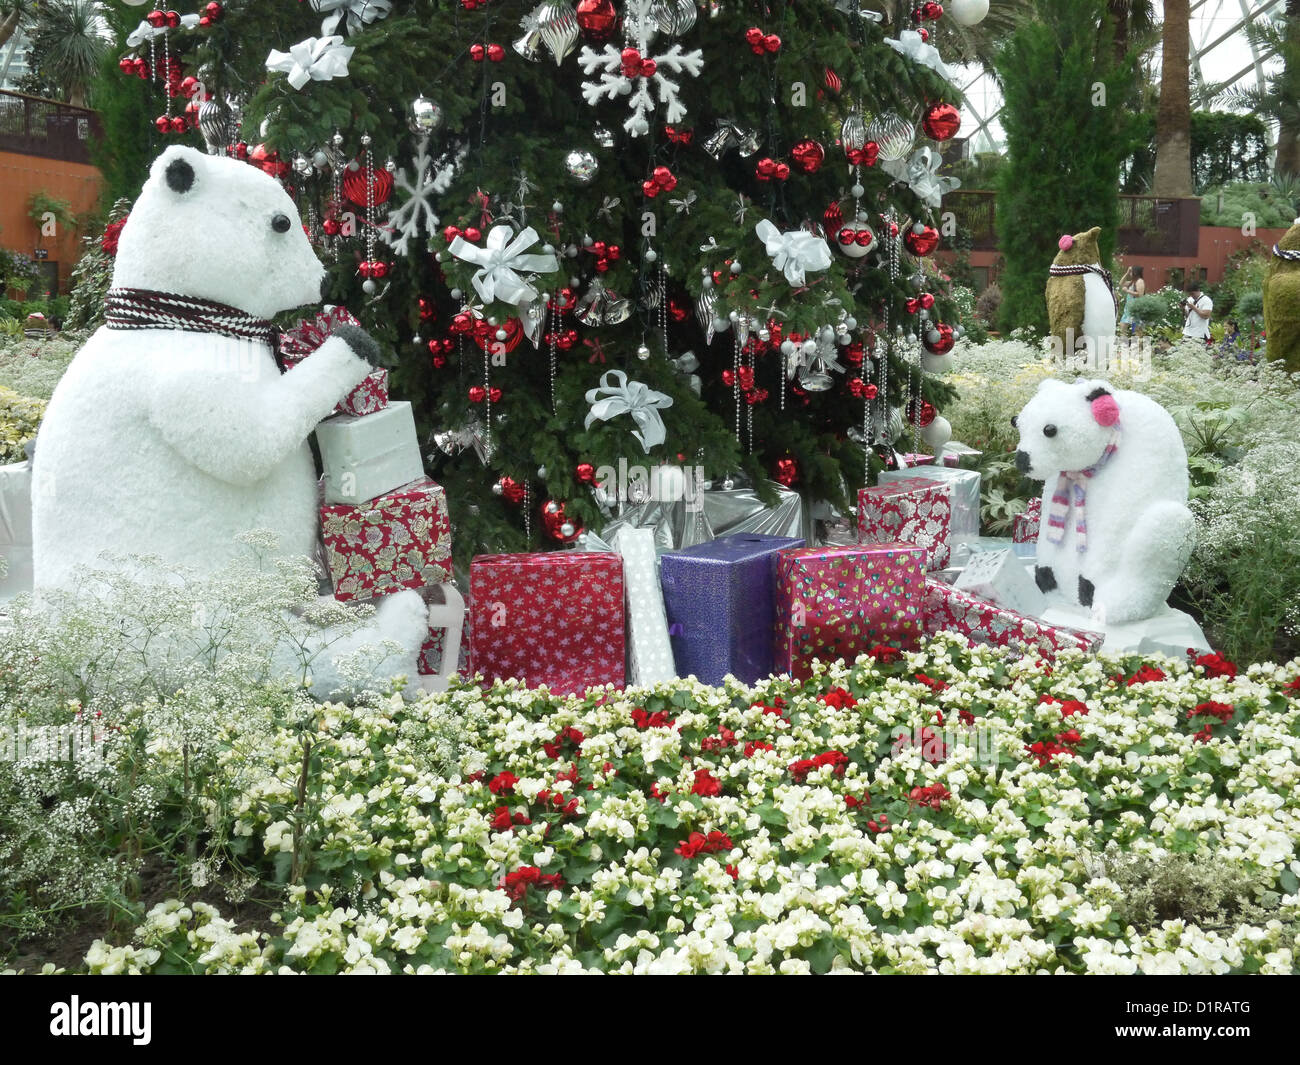 Polar bear Christmas tree present Stock Photo